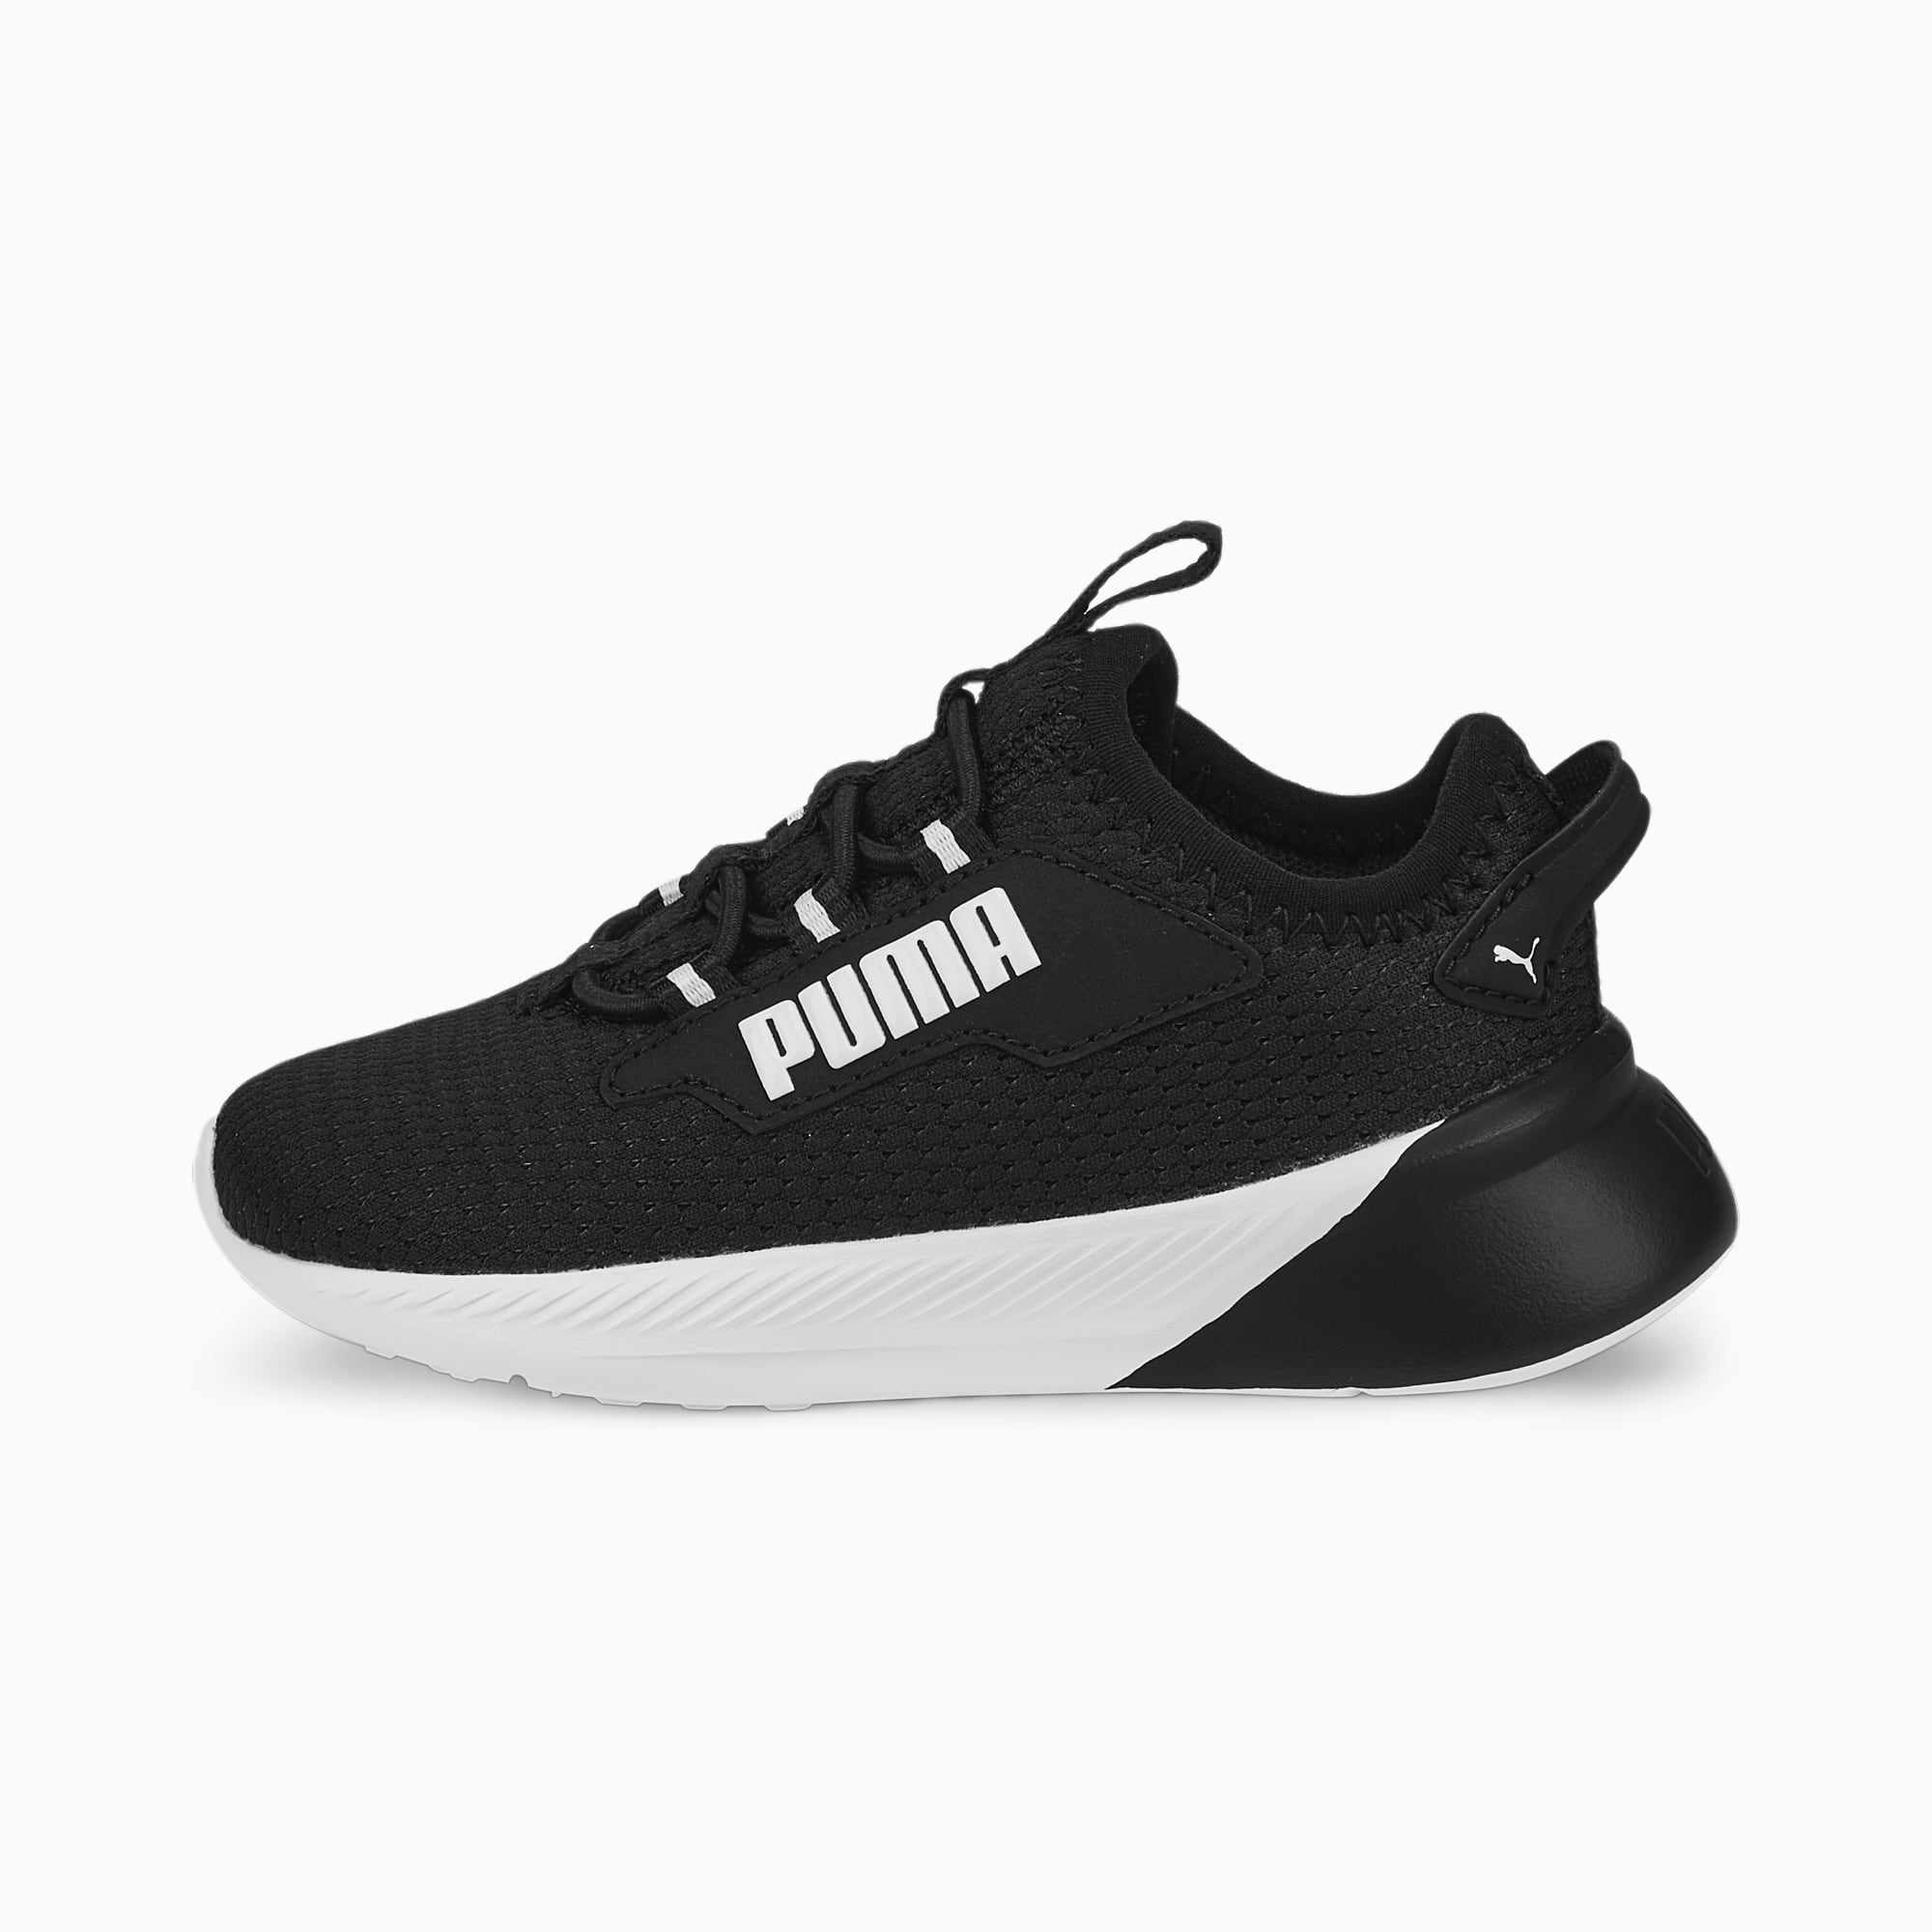 PUMA Retaliate 2 AC Sneakers Babys Schuhe, Schwarz/Weiß, Größe: 19, Schuhe